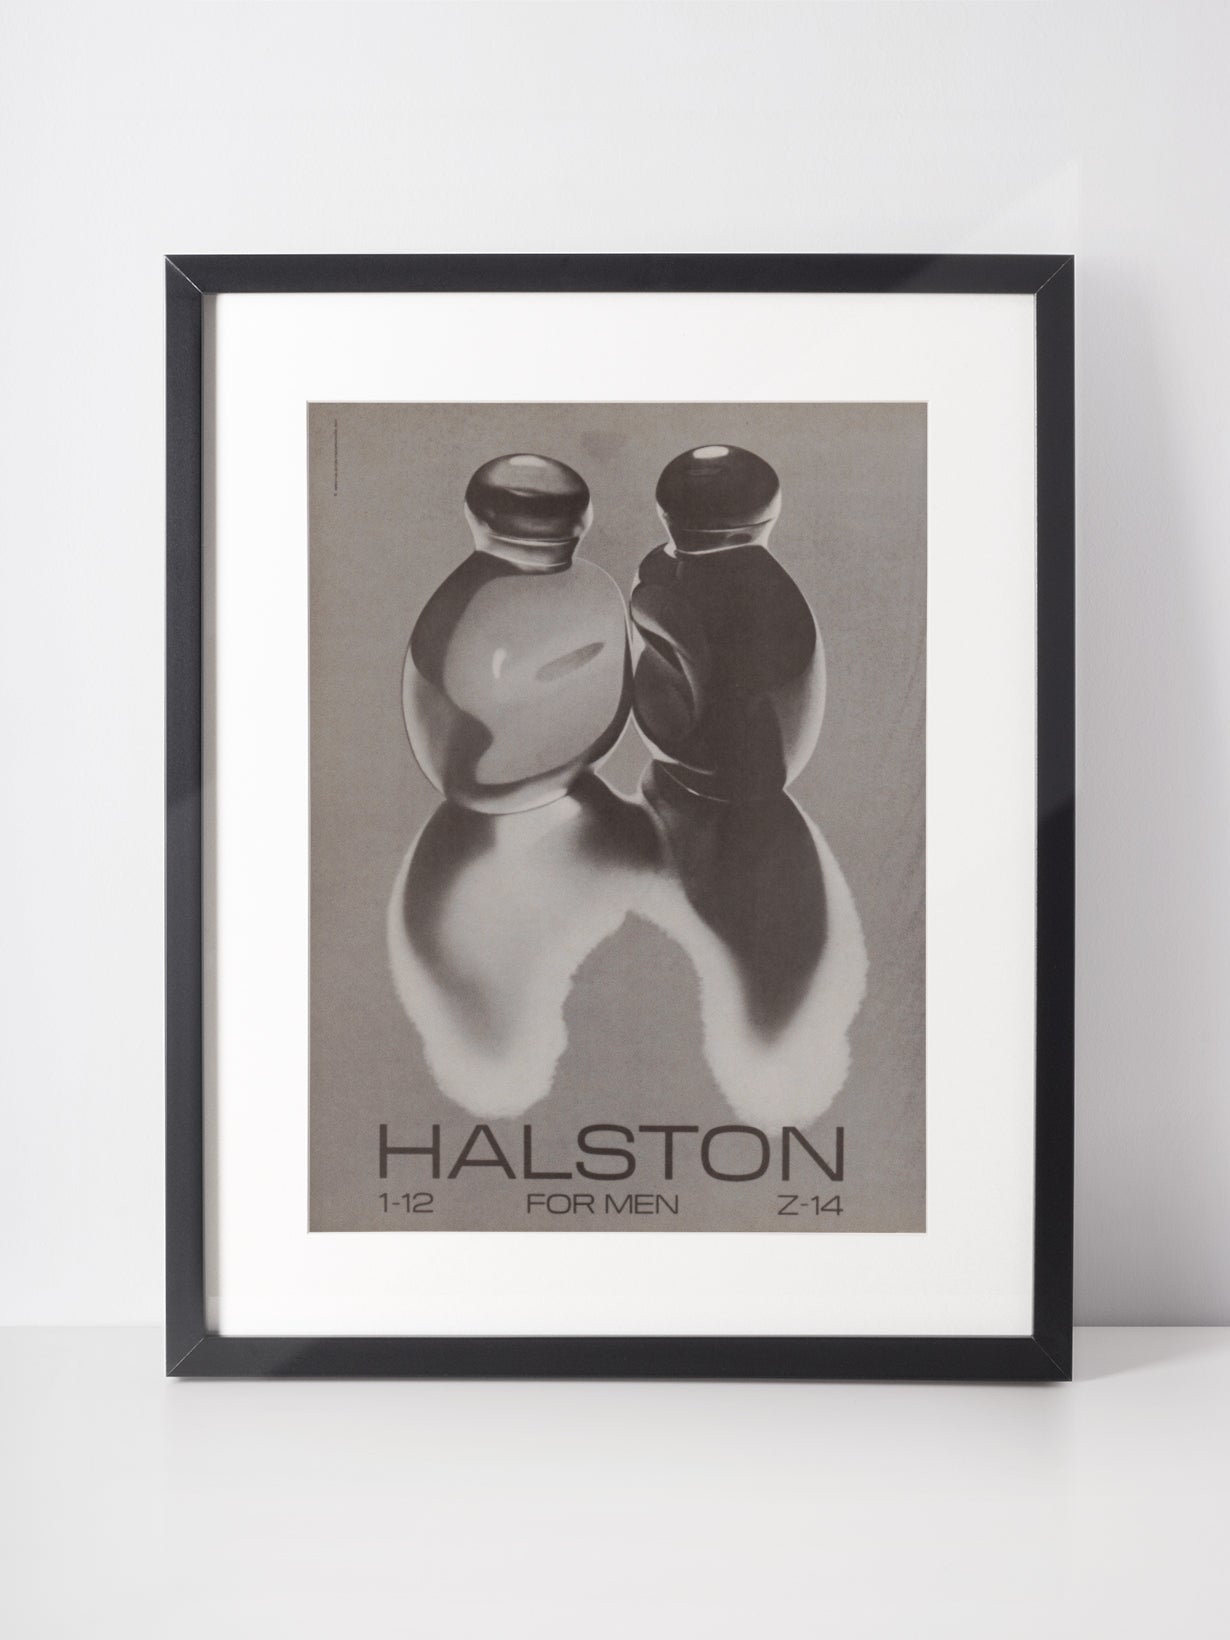 HALSTON 1981 Vintage Advertisement Perfume Scent Fragrance